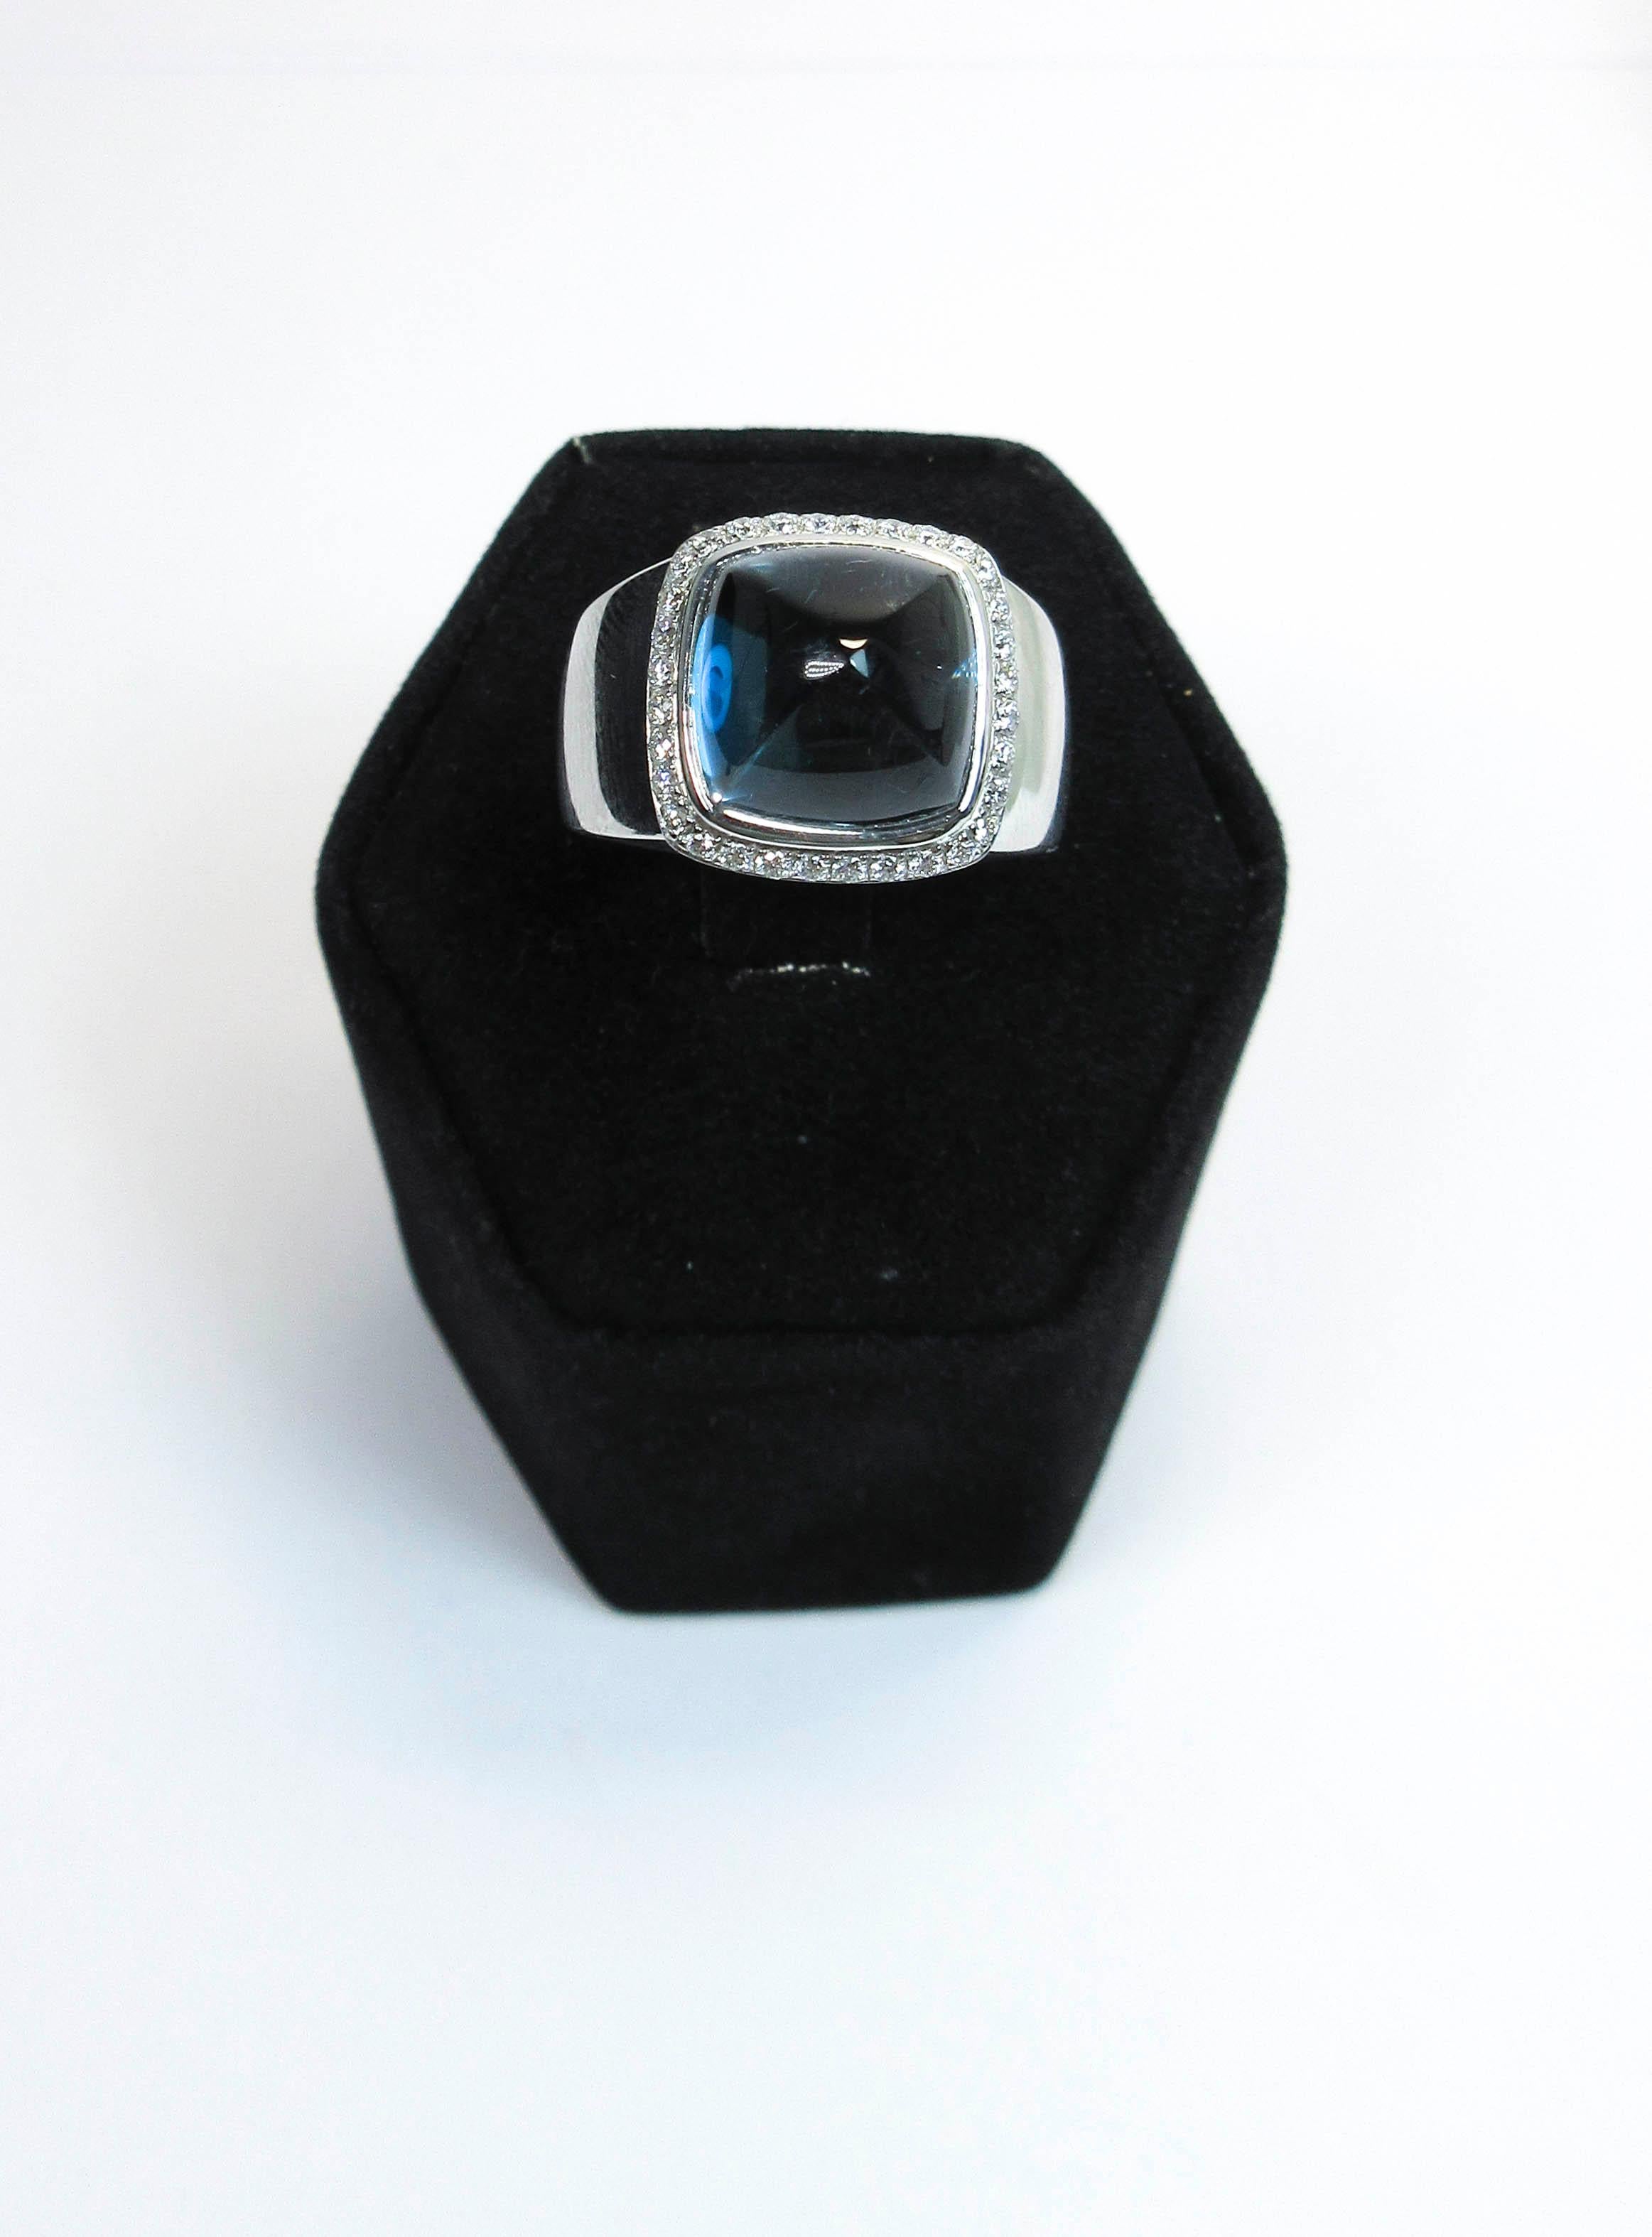 Fred of Paris 18 Karat White Gold Sugarloaf Cabochon Blue Topaz Diamond Ring For Sale 2